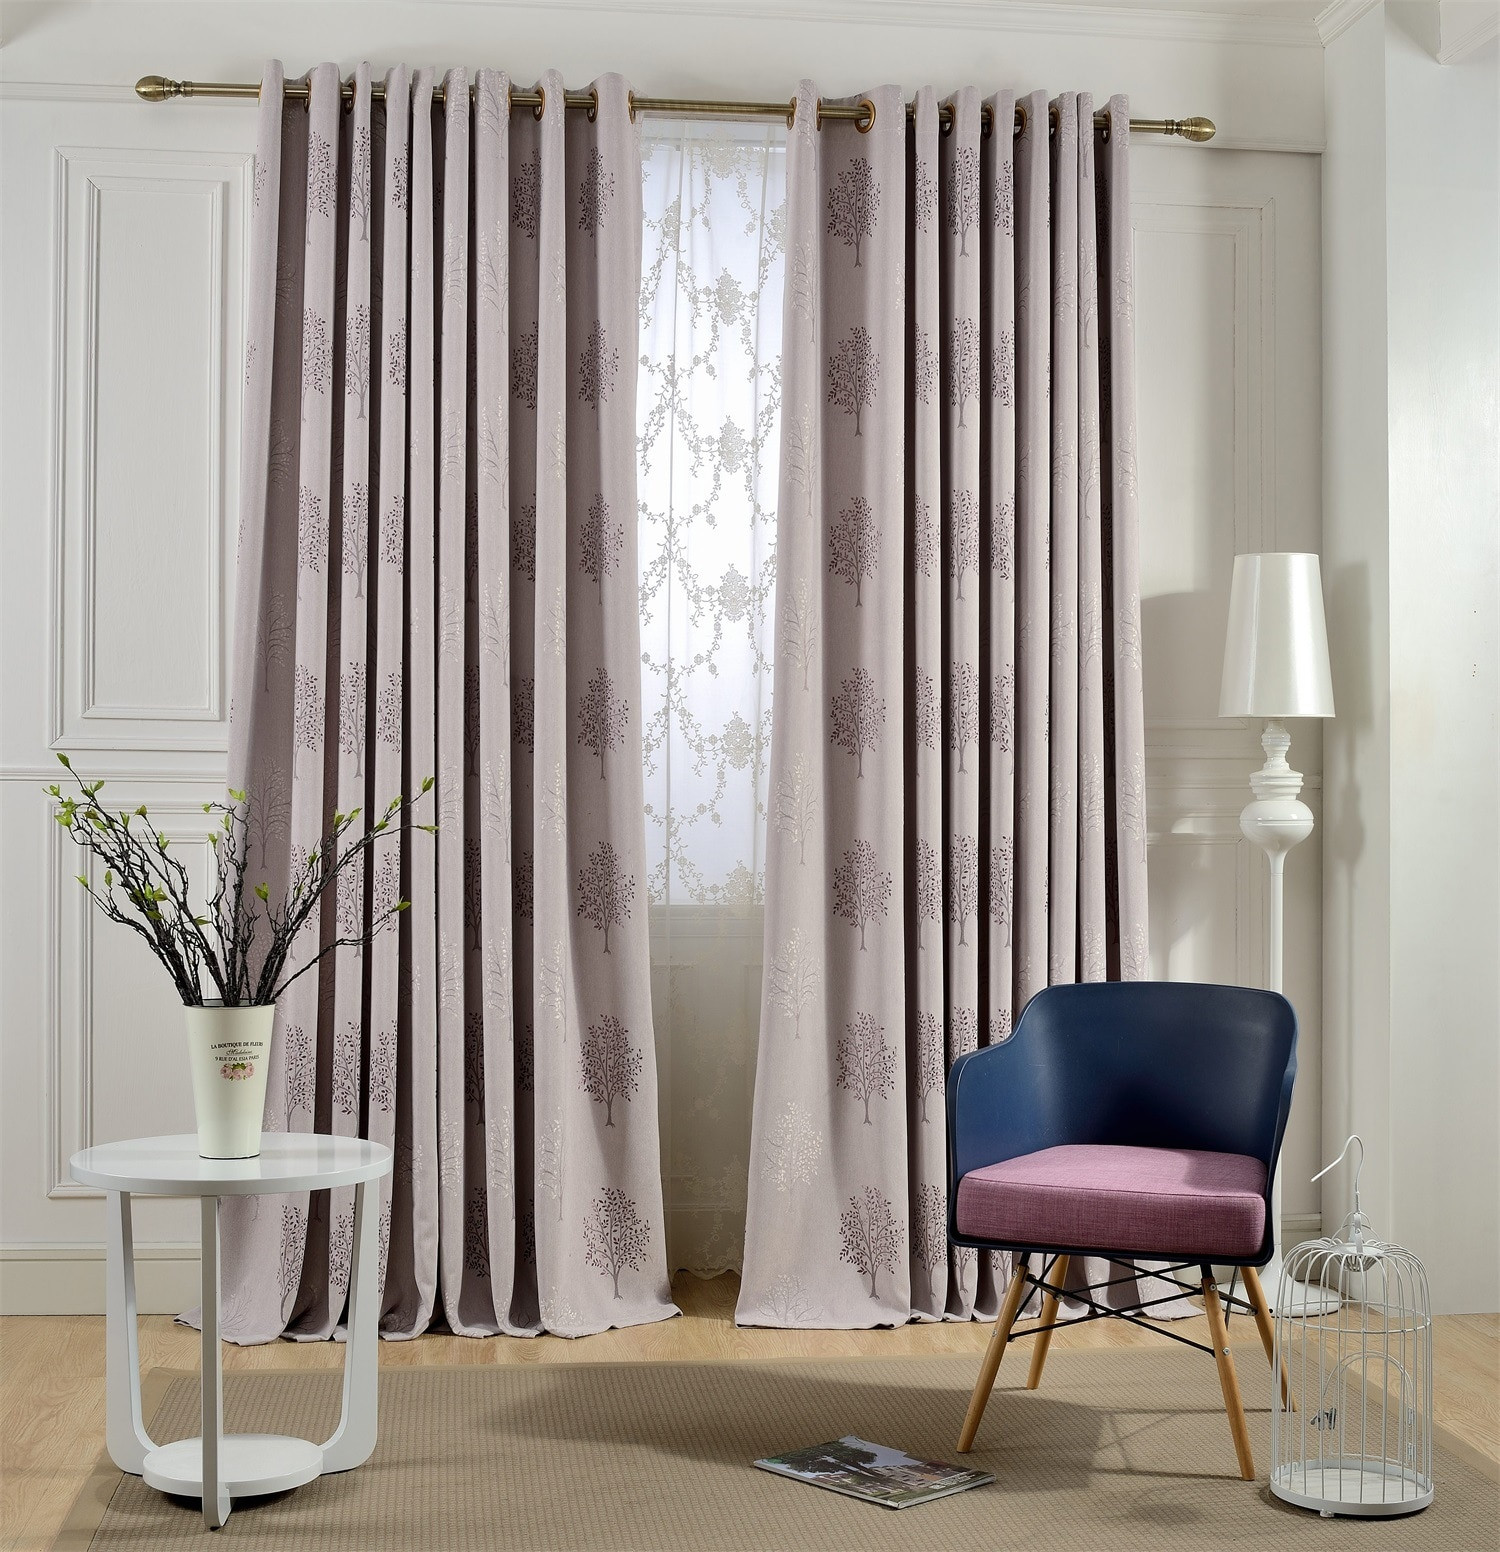 Elegant Curtain For Living Room
 Popular Elegant Living Room Curtains Buy Cheap Elegant